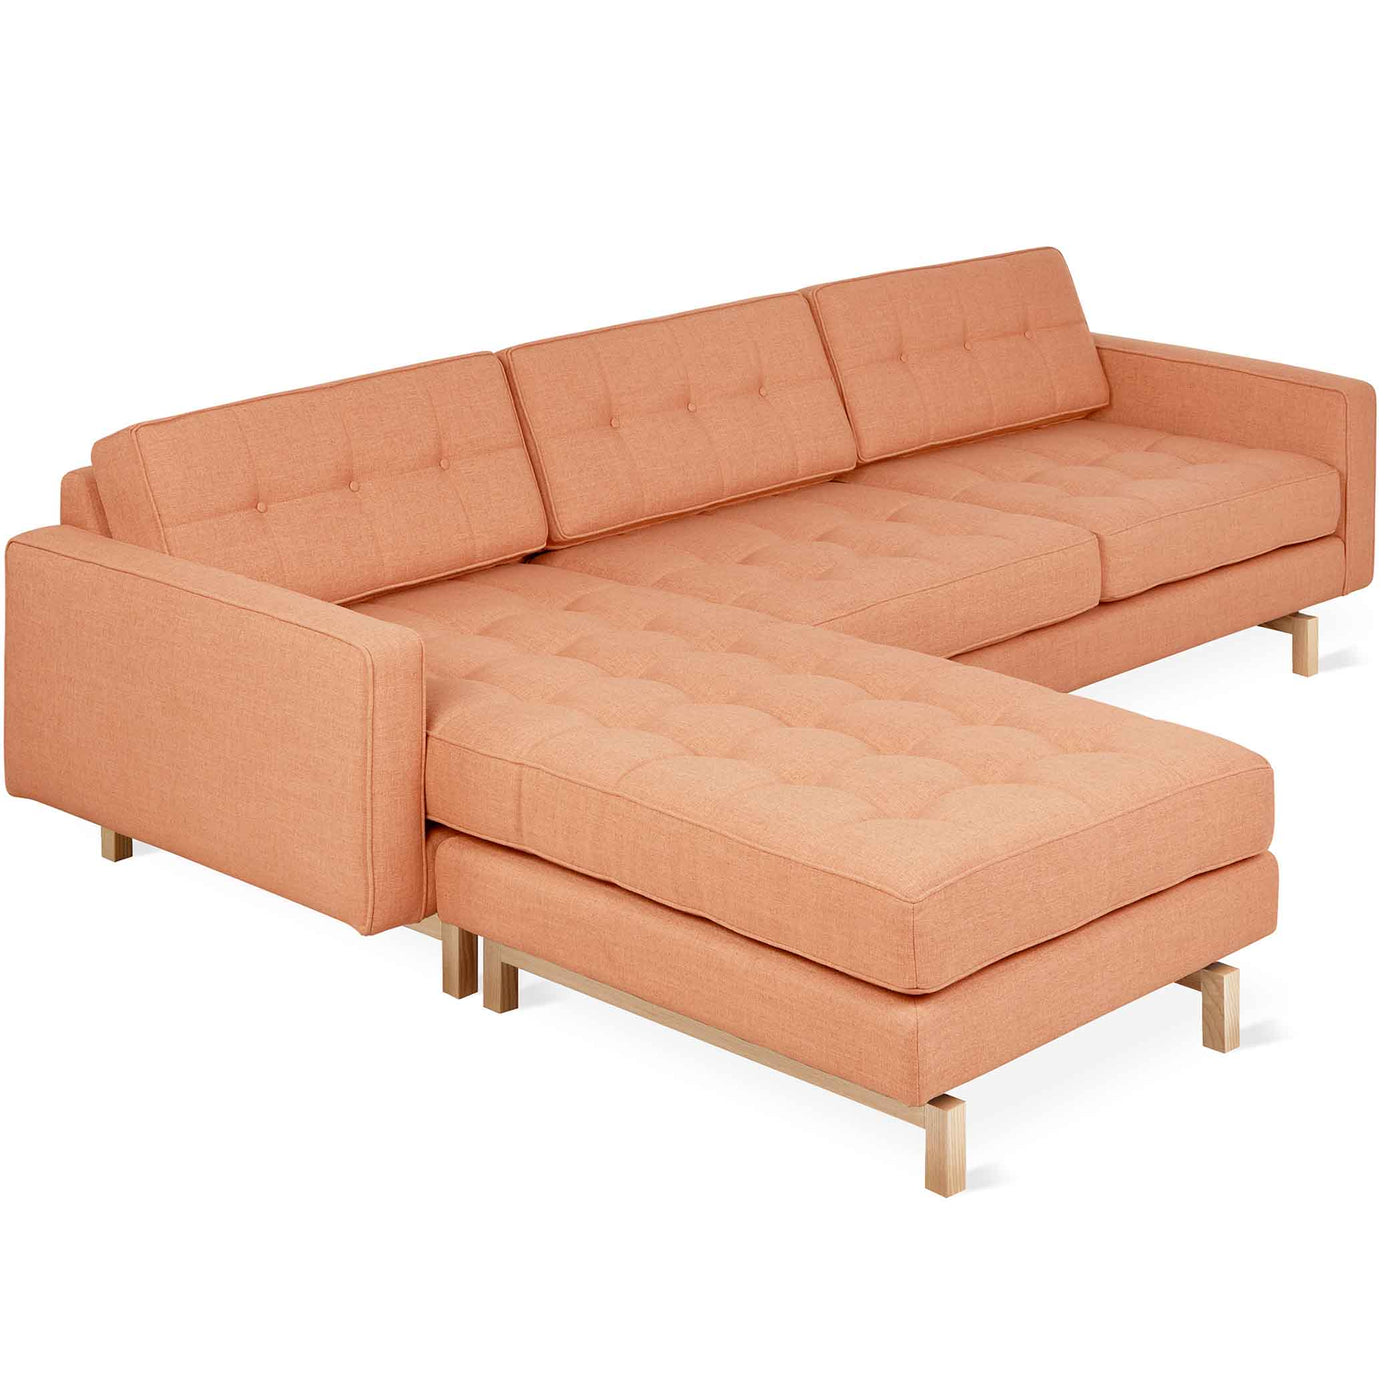 Gus* Modern Jane 2, sofa bi-sectionnel, en bois et tissu, caledon sedona, naturel